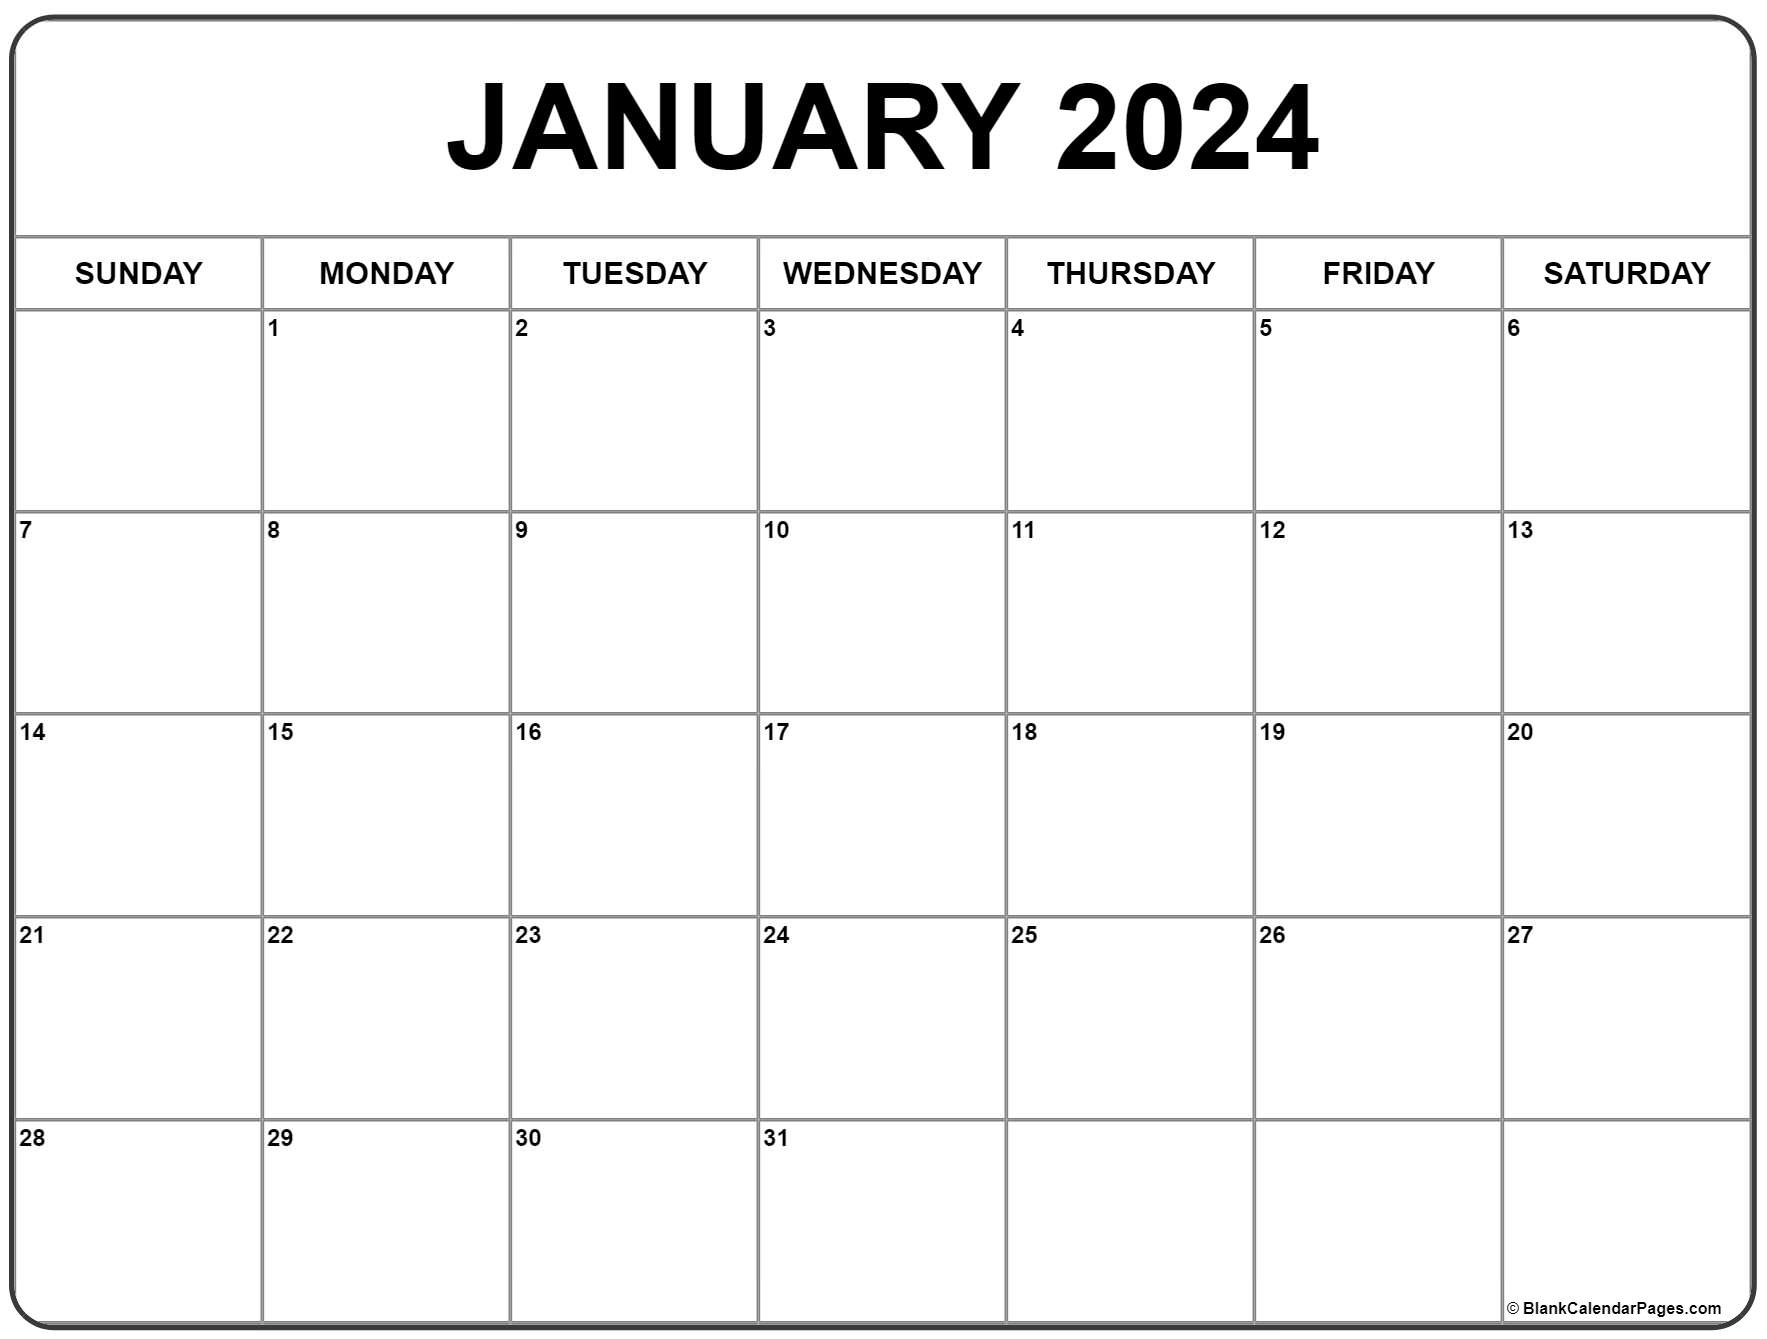 January 2024 Calendar | Free Printable Calendar for 2024 January Free Printable Calendar